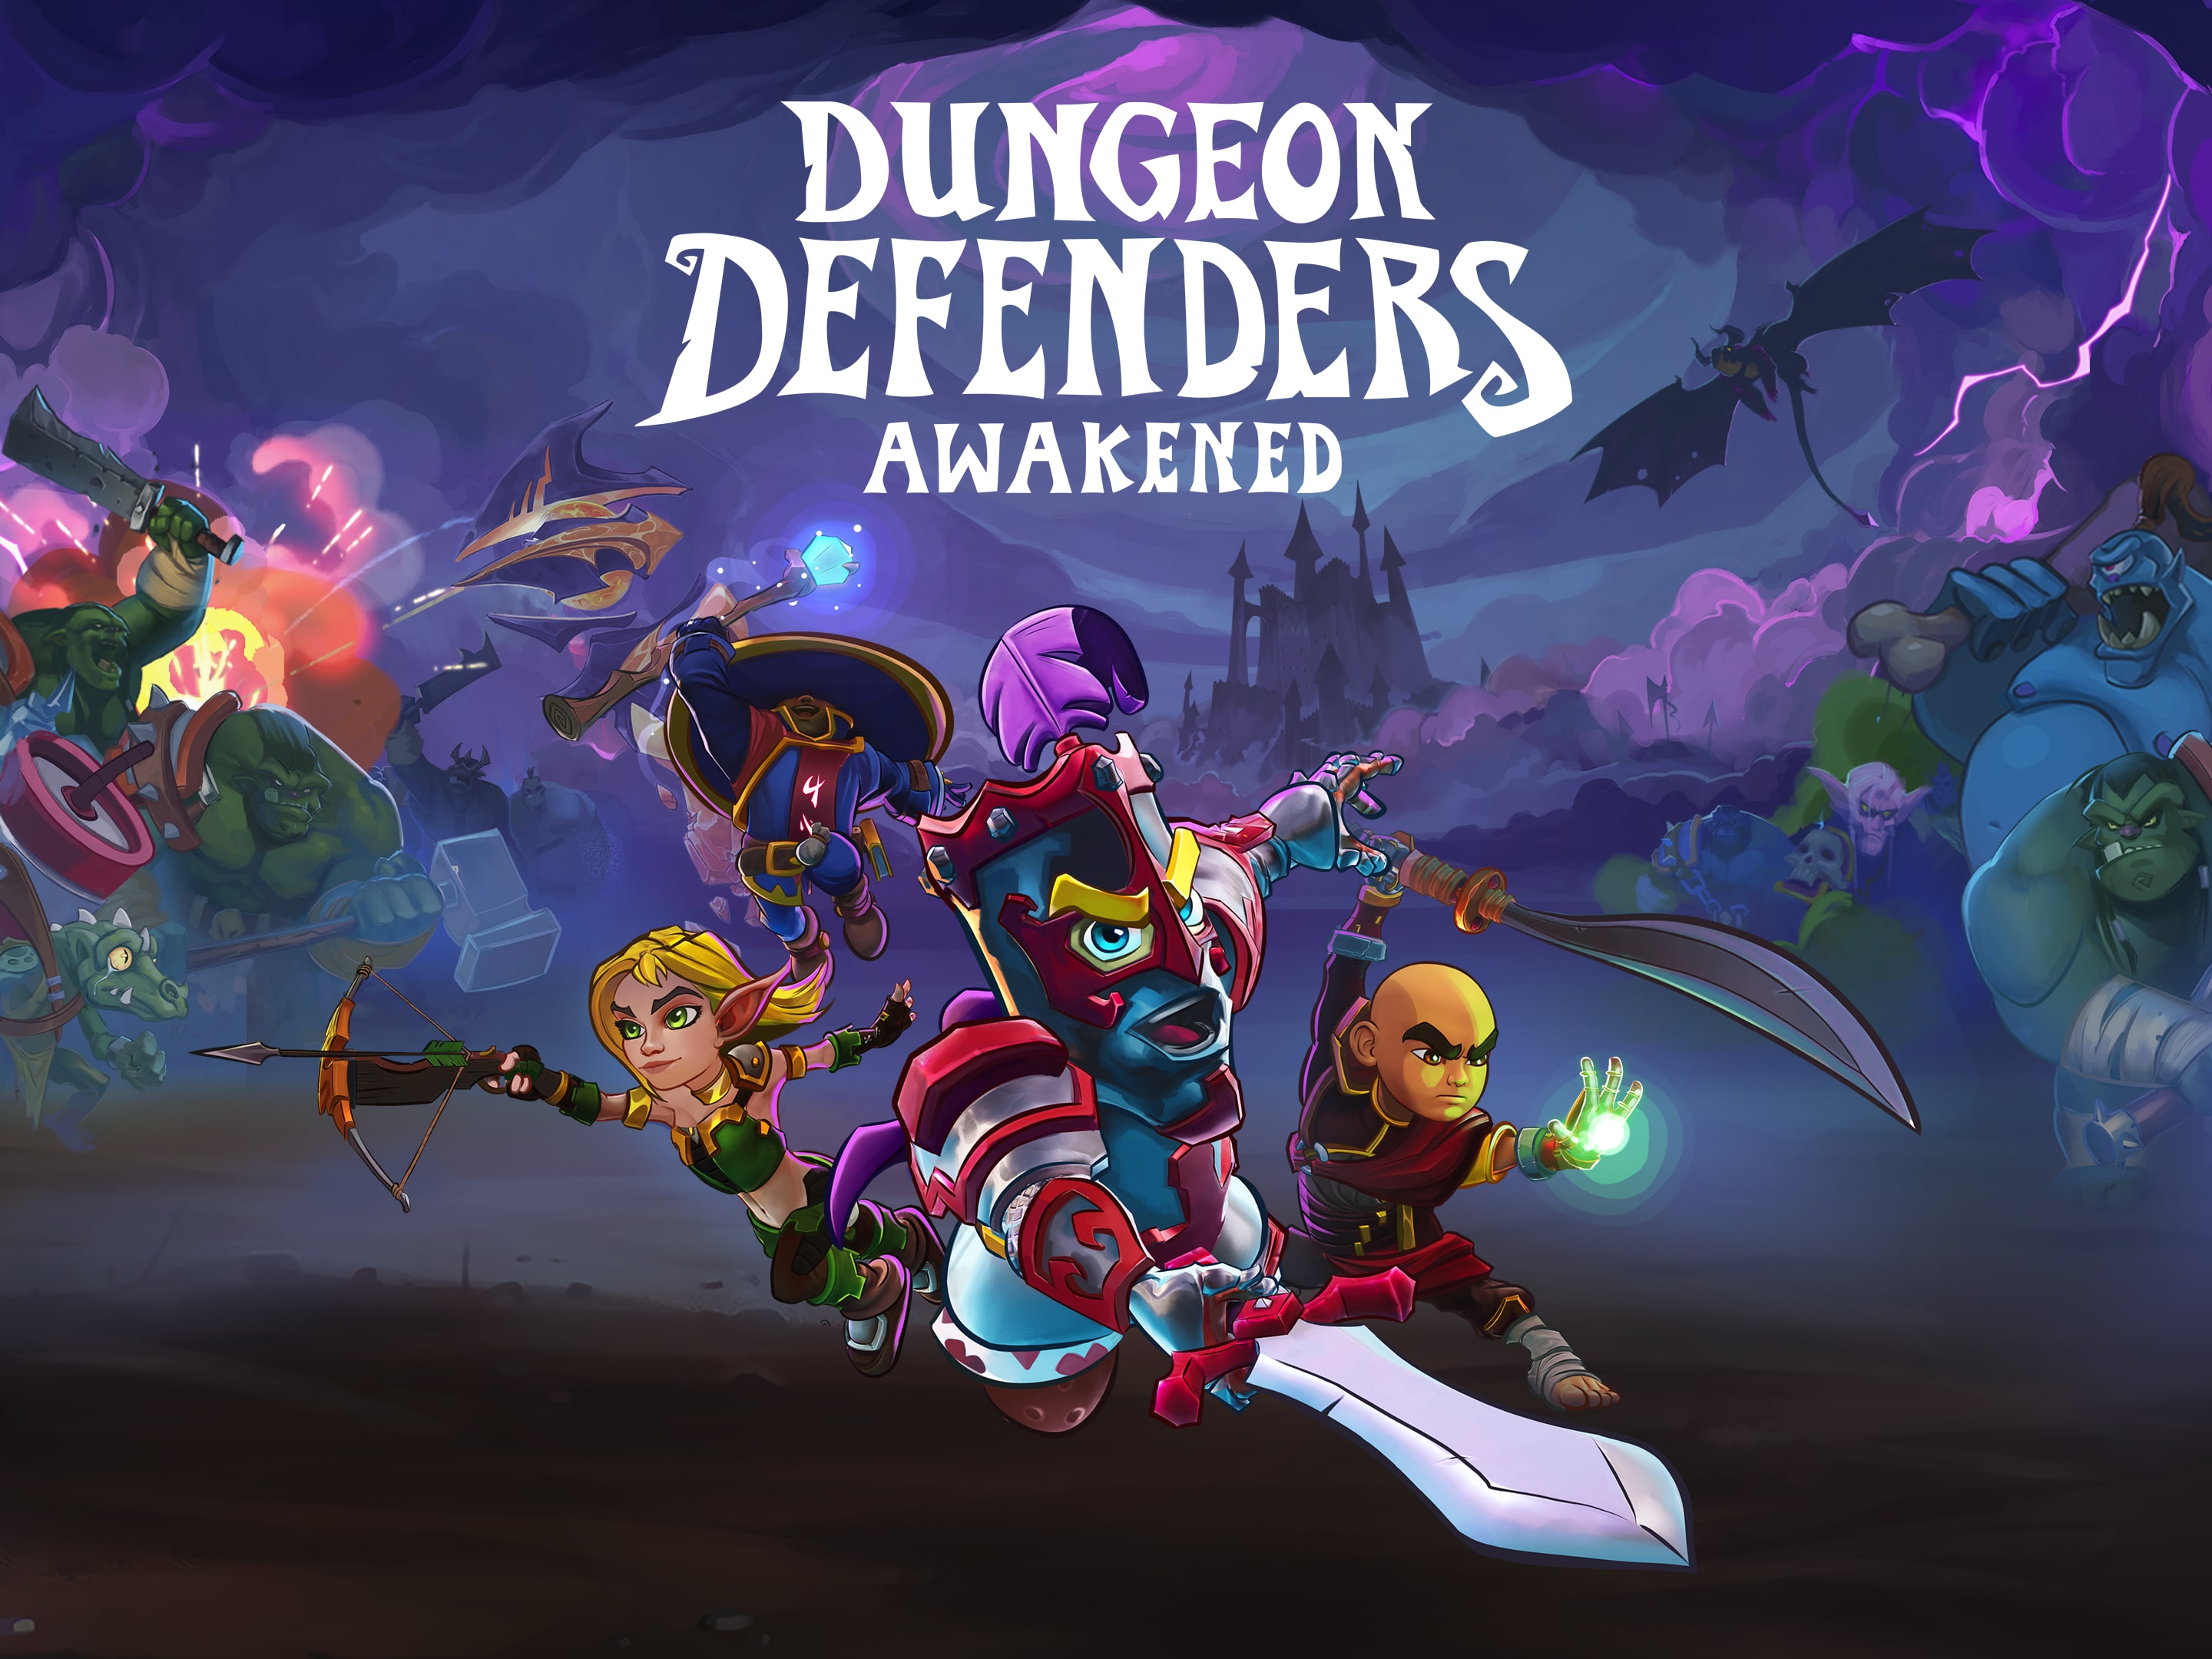 Dungeon defenders awakening. Данжеон дефендерс 2. Dungeon Defenders Awakened. Defender 2. Dungeon Defenders 2 logo.